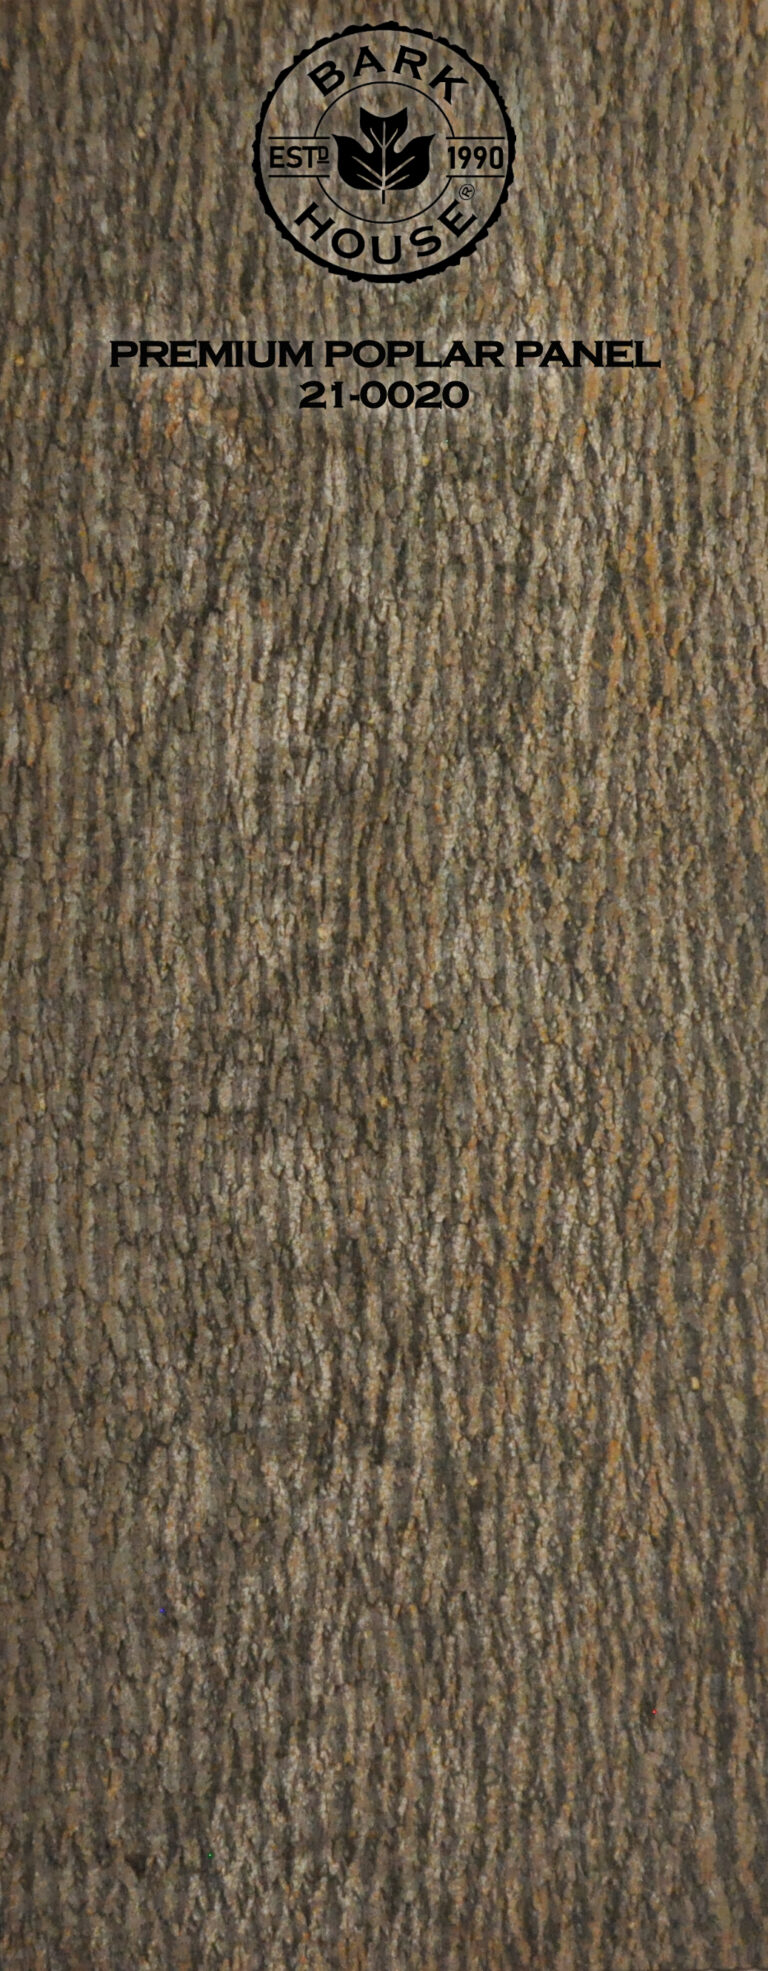 Bark House poplar bark panel SKU POPP-PRE-21-0020